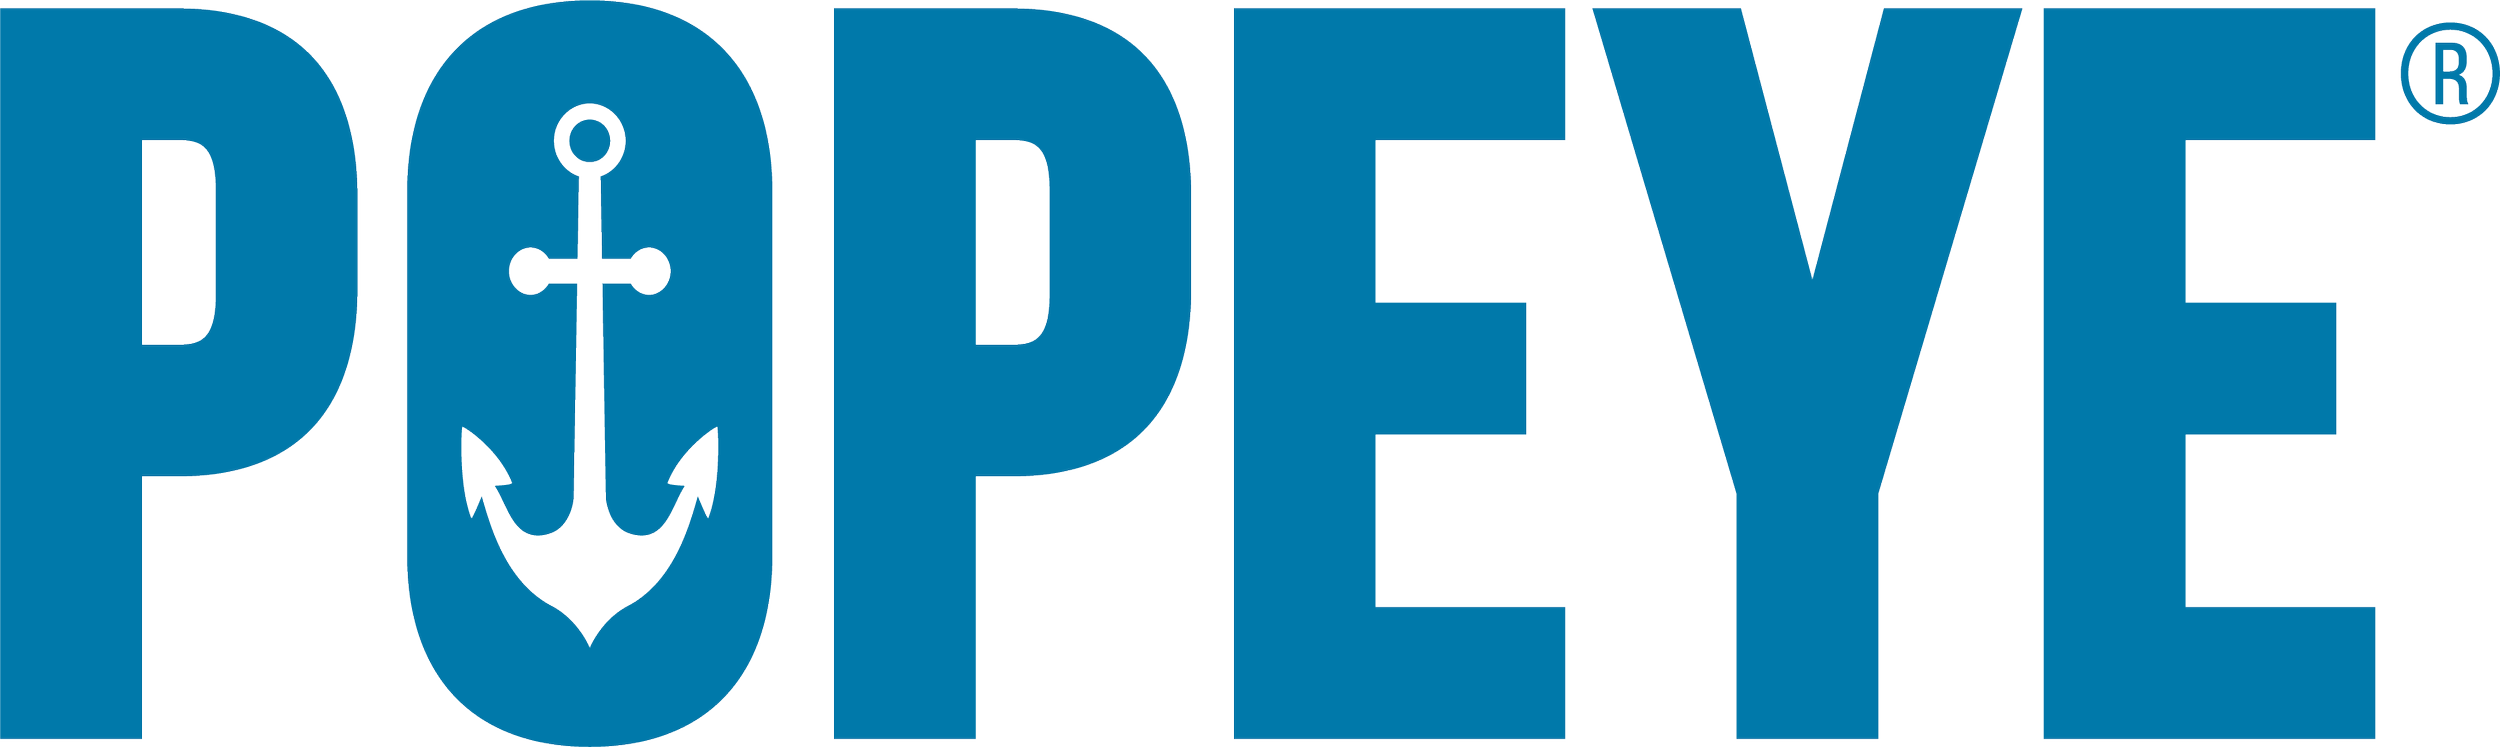 Popeye Blue Logo.png